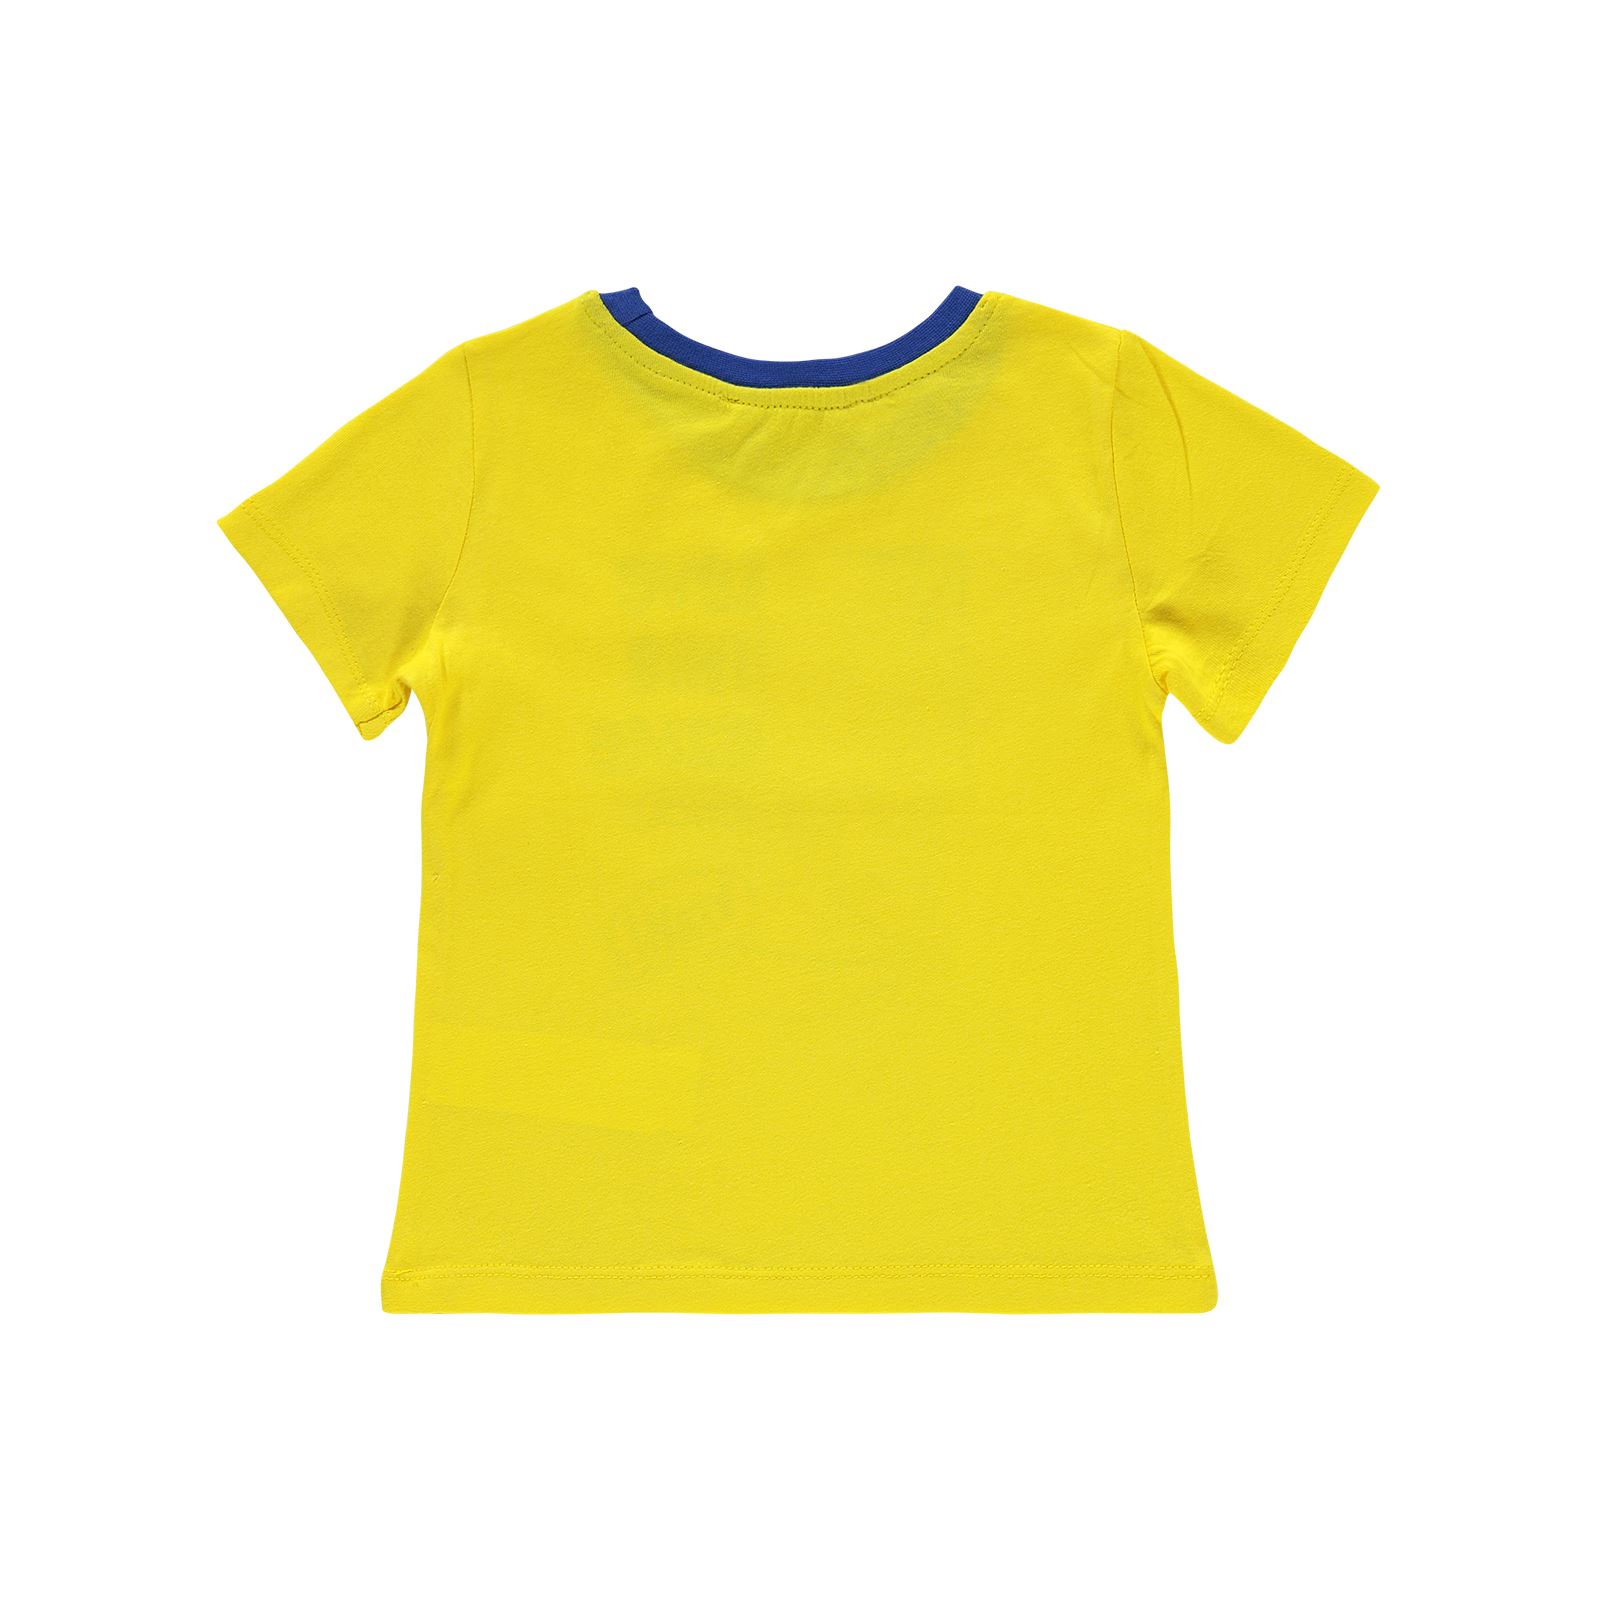 Small Socıety Erkek Çocuk Tişört 2-7 Yaş Sarı